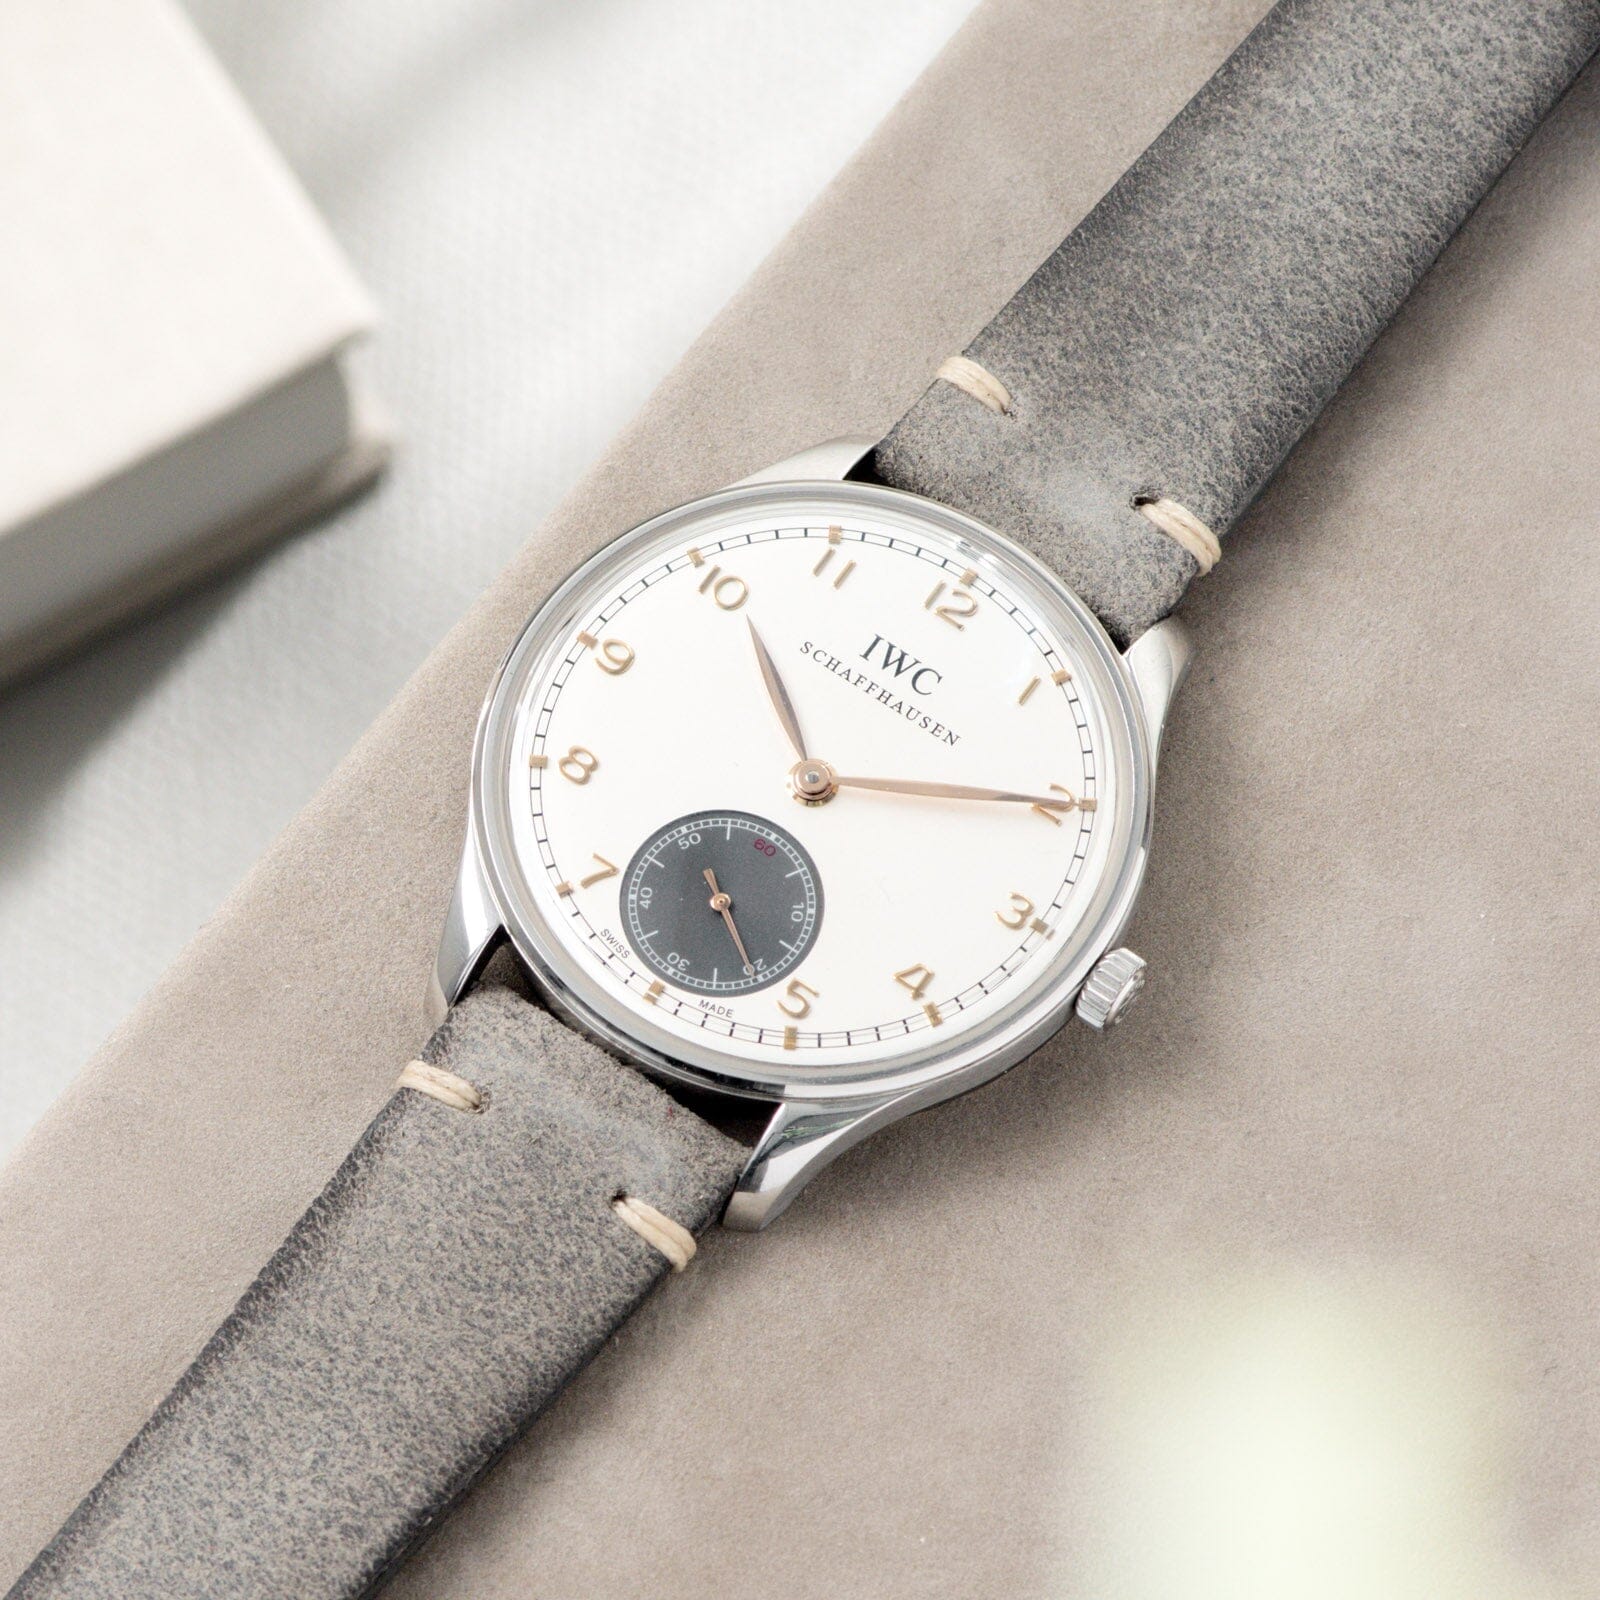 Rugged Grey Leather Watch Strap